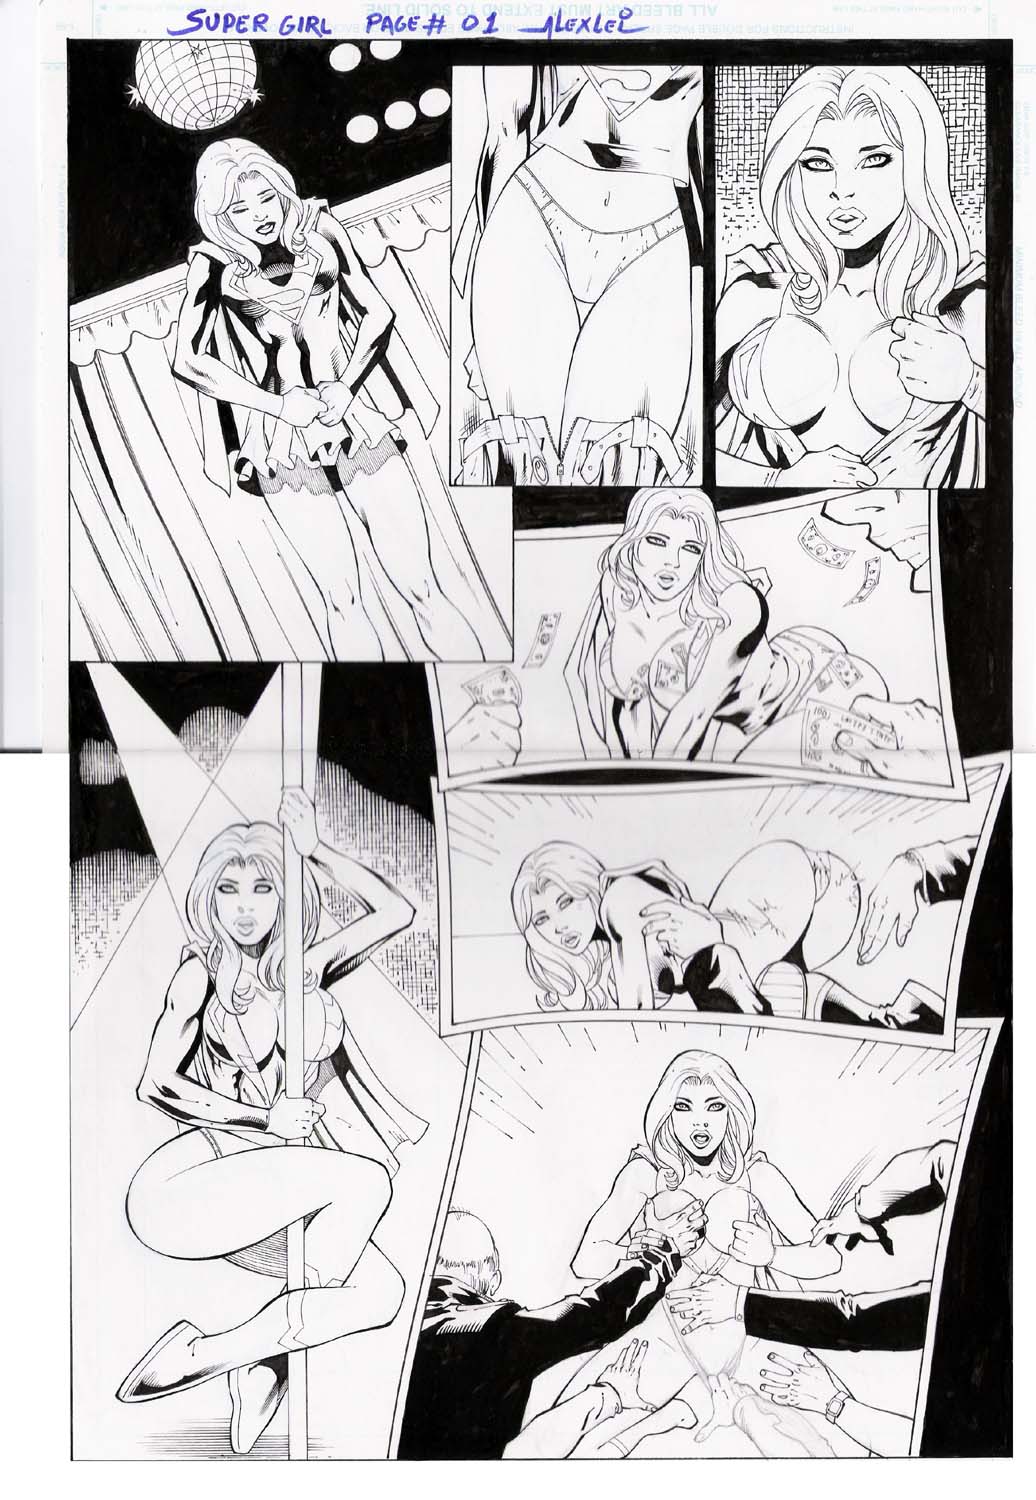 Supergirl - Superheroine Stripper! page 01 .jpg